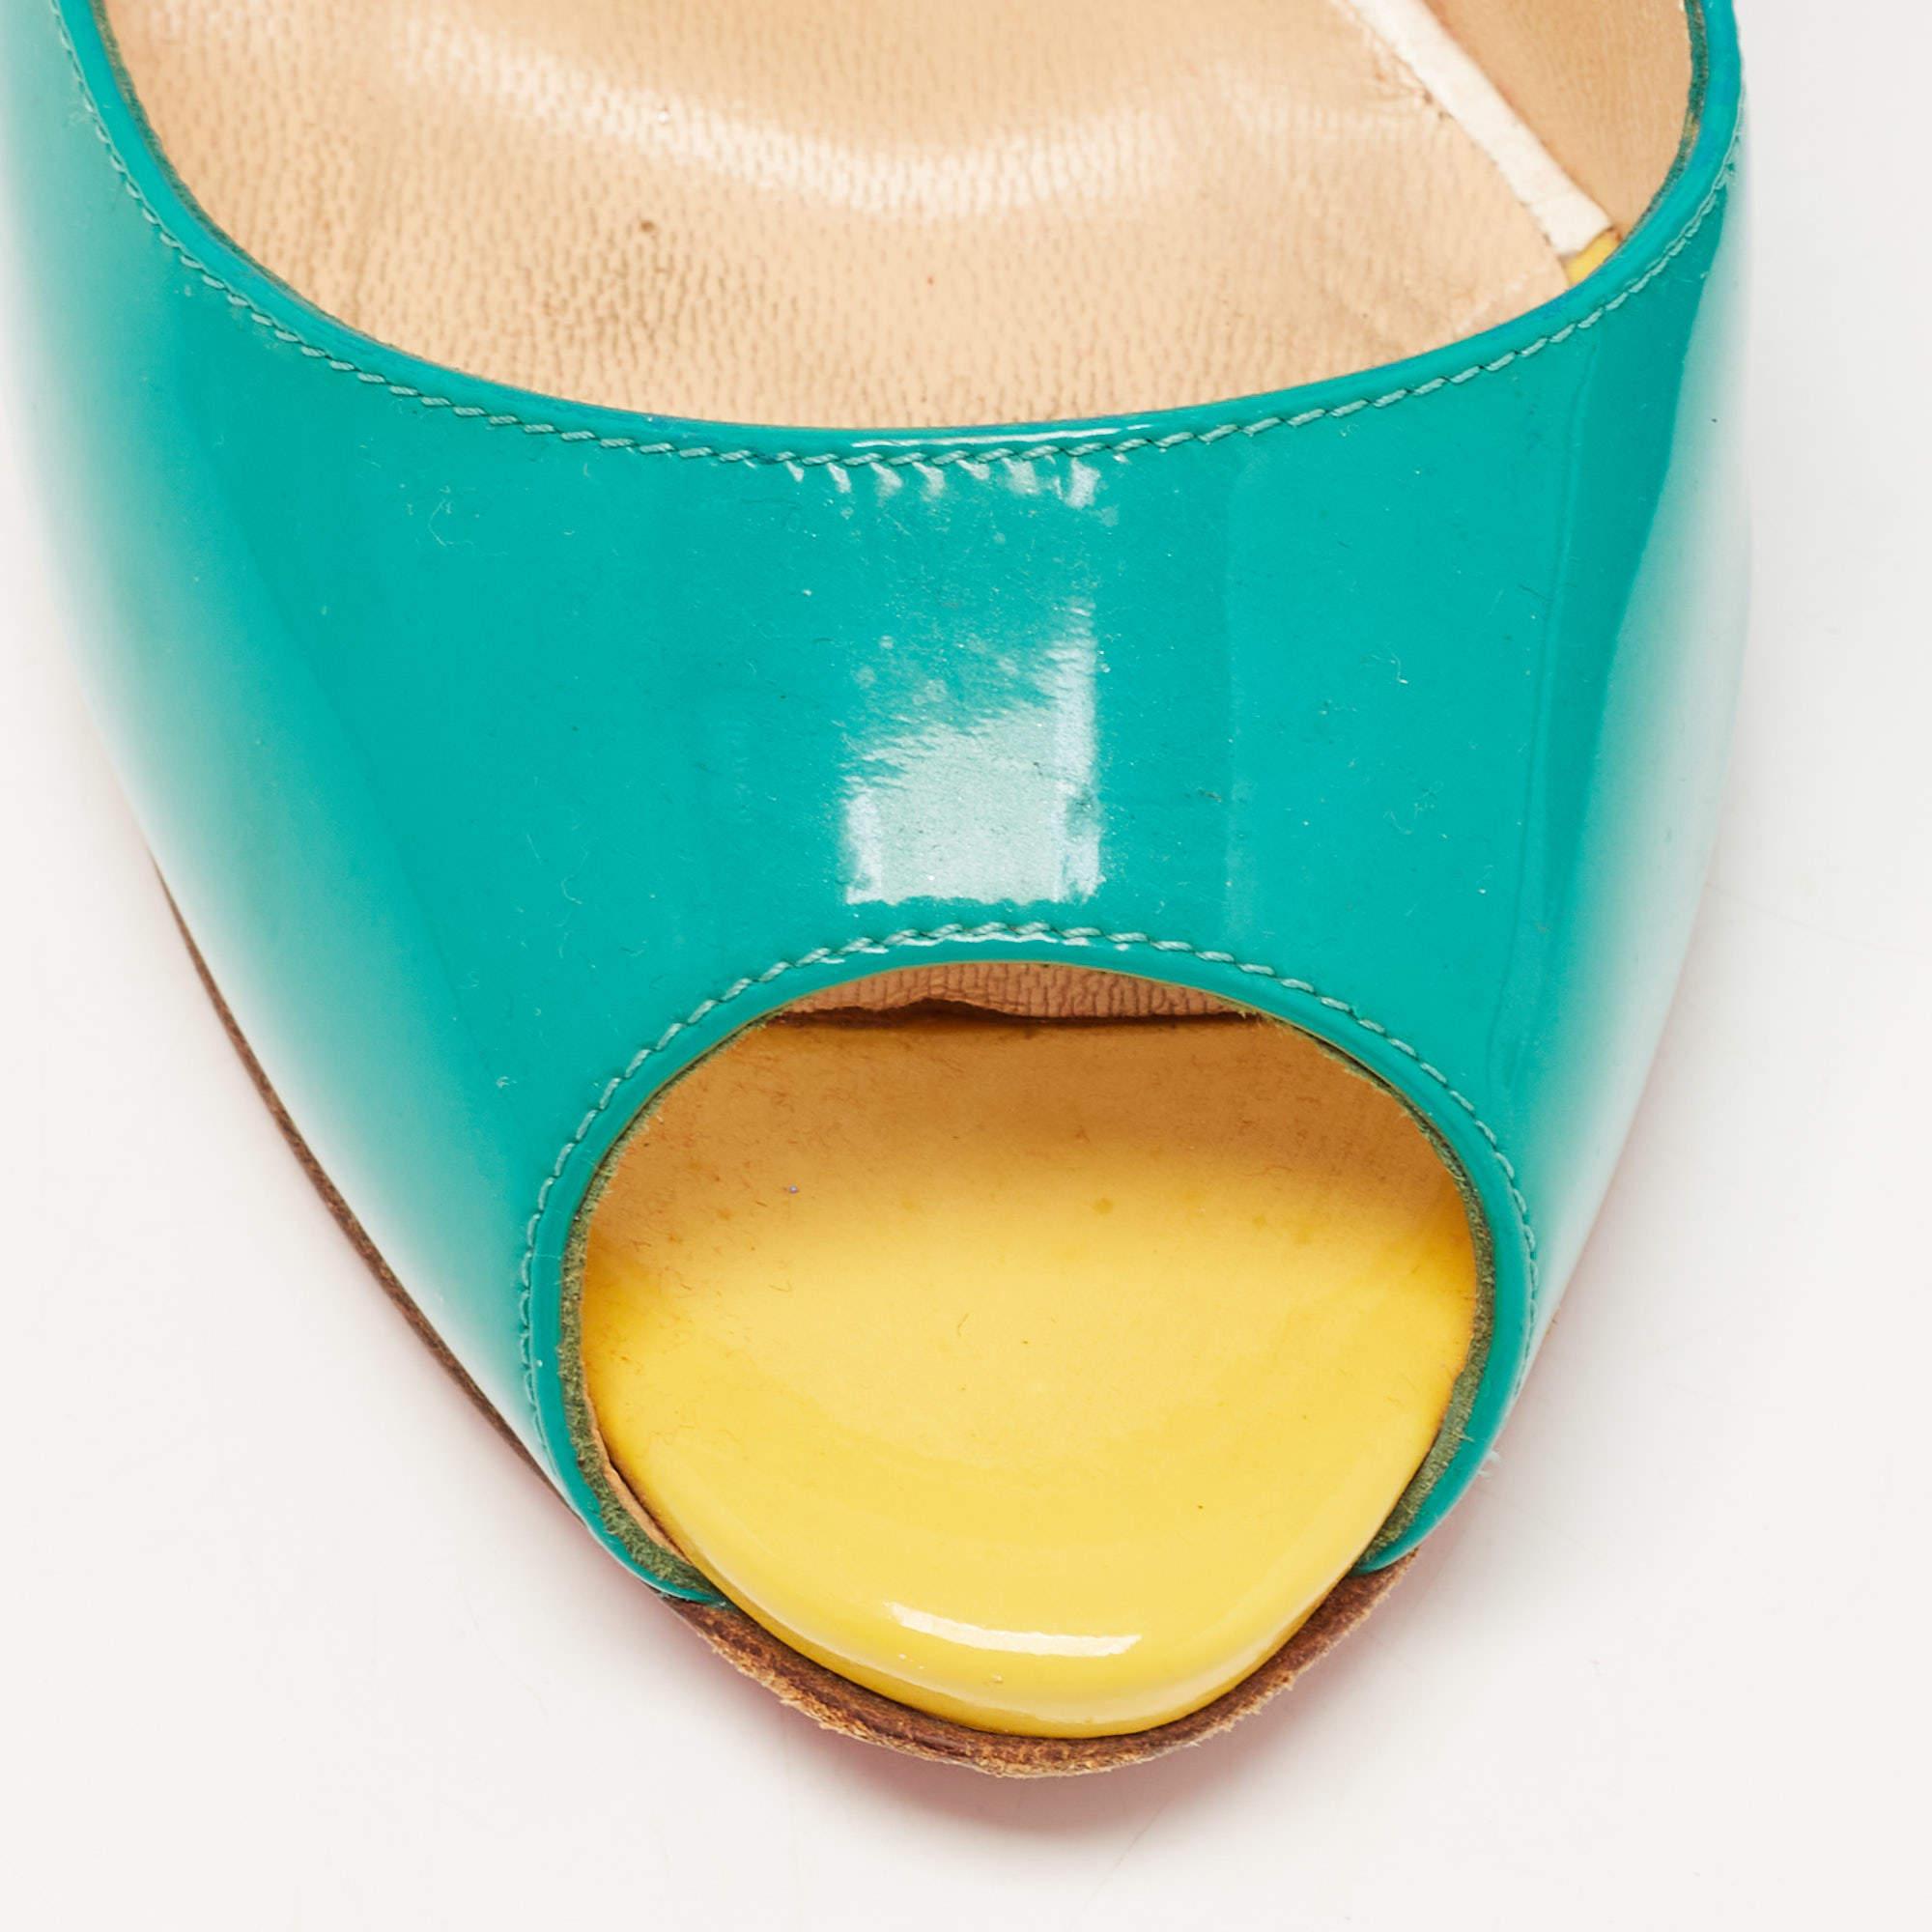 Christian Louboutin Green Patent Leather Peep Toe Slingback Pumps Size 38.5 2